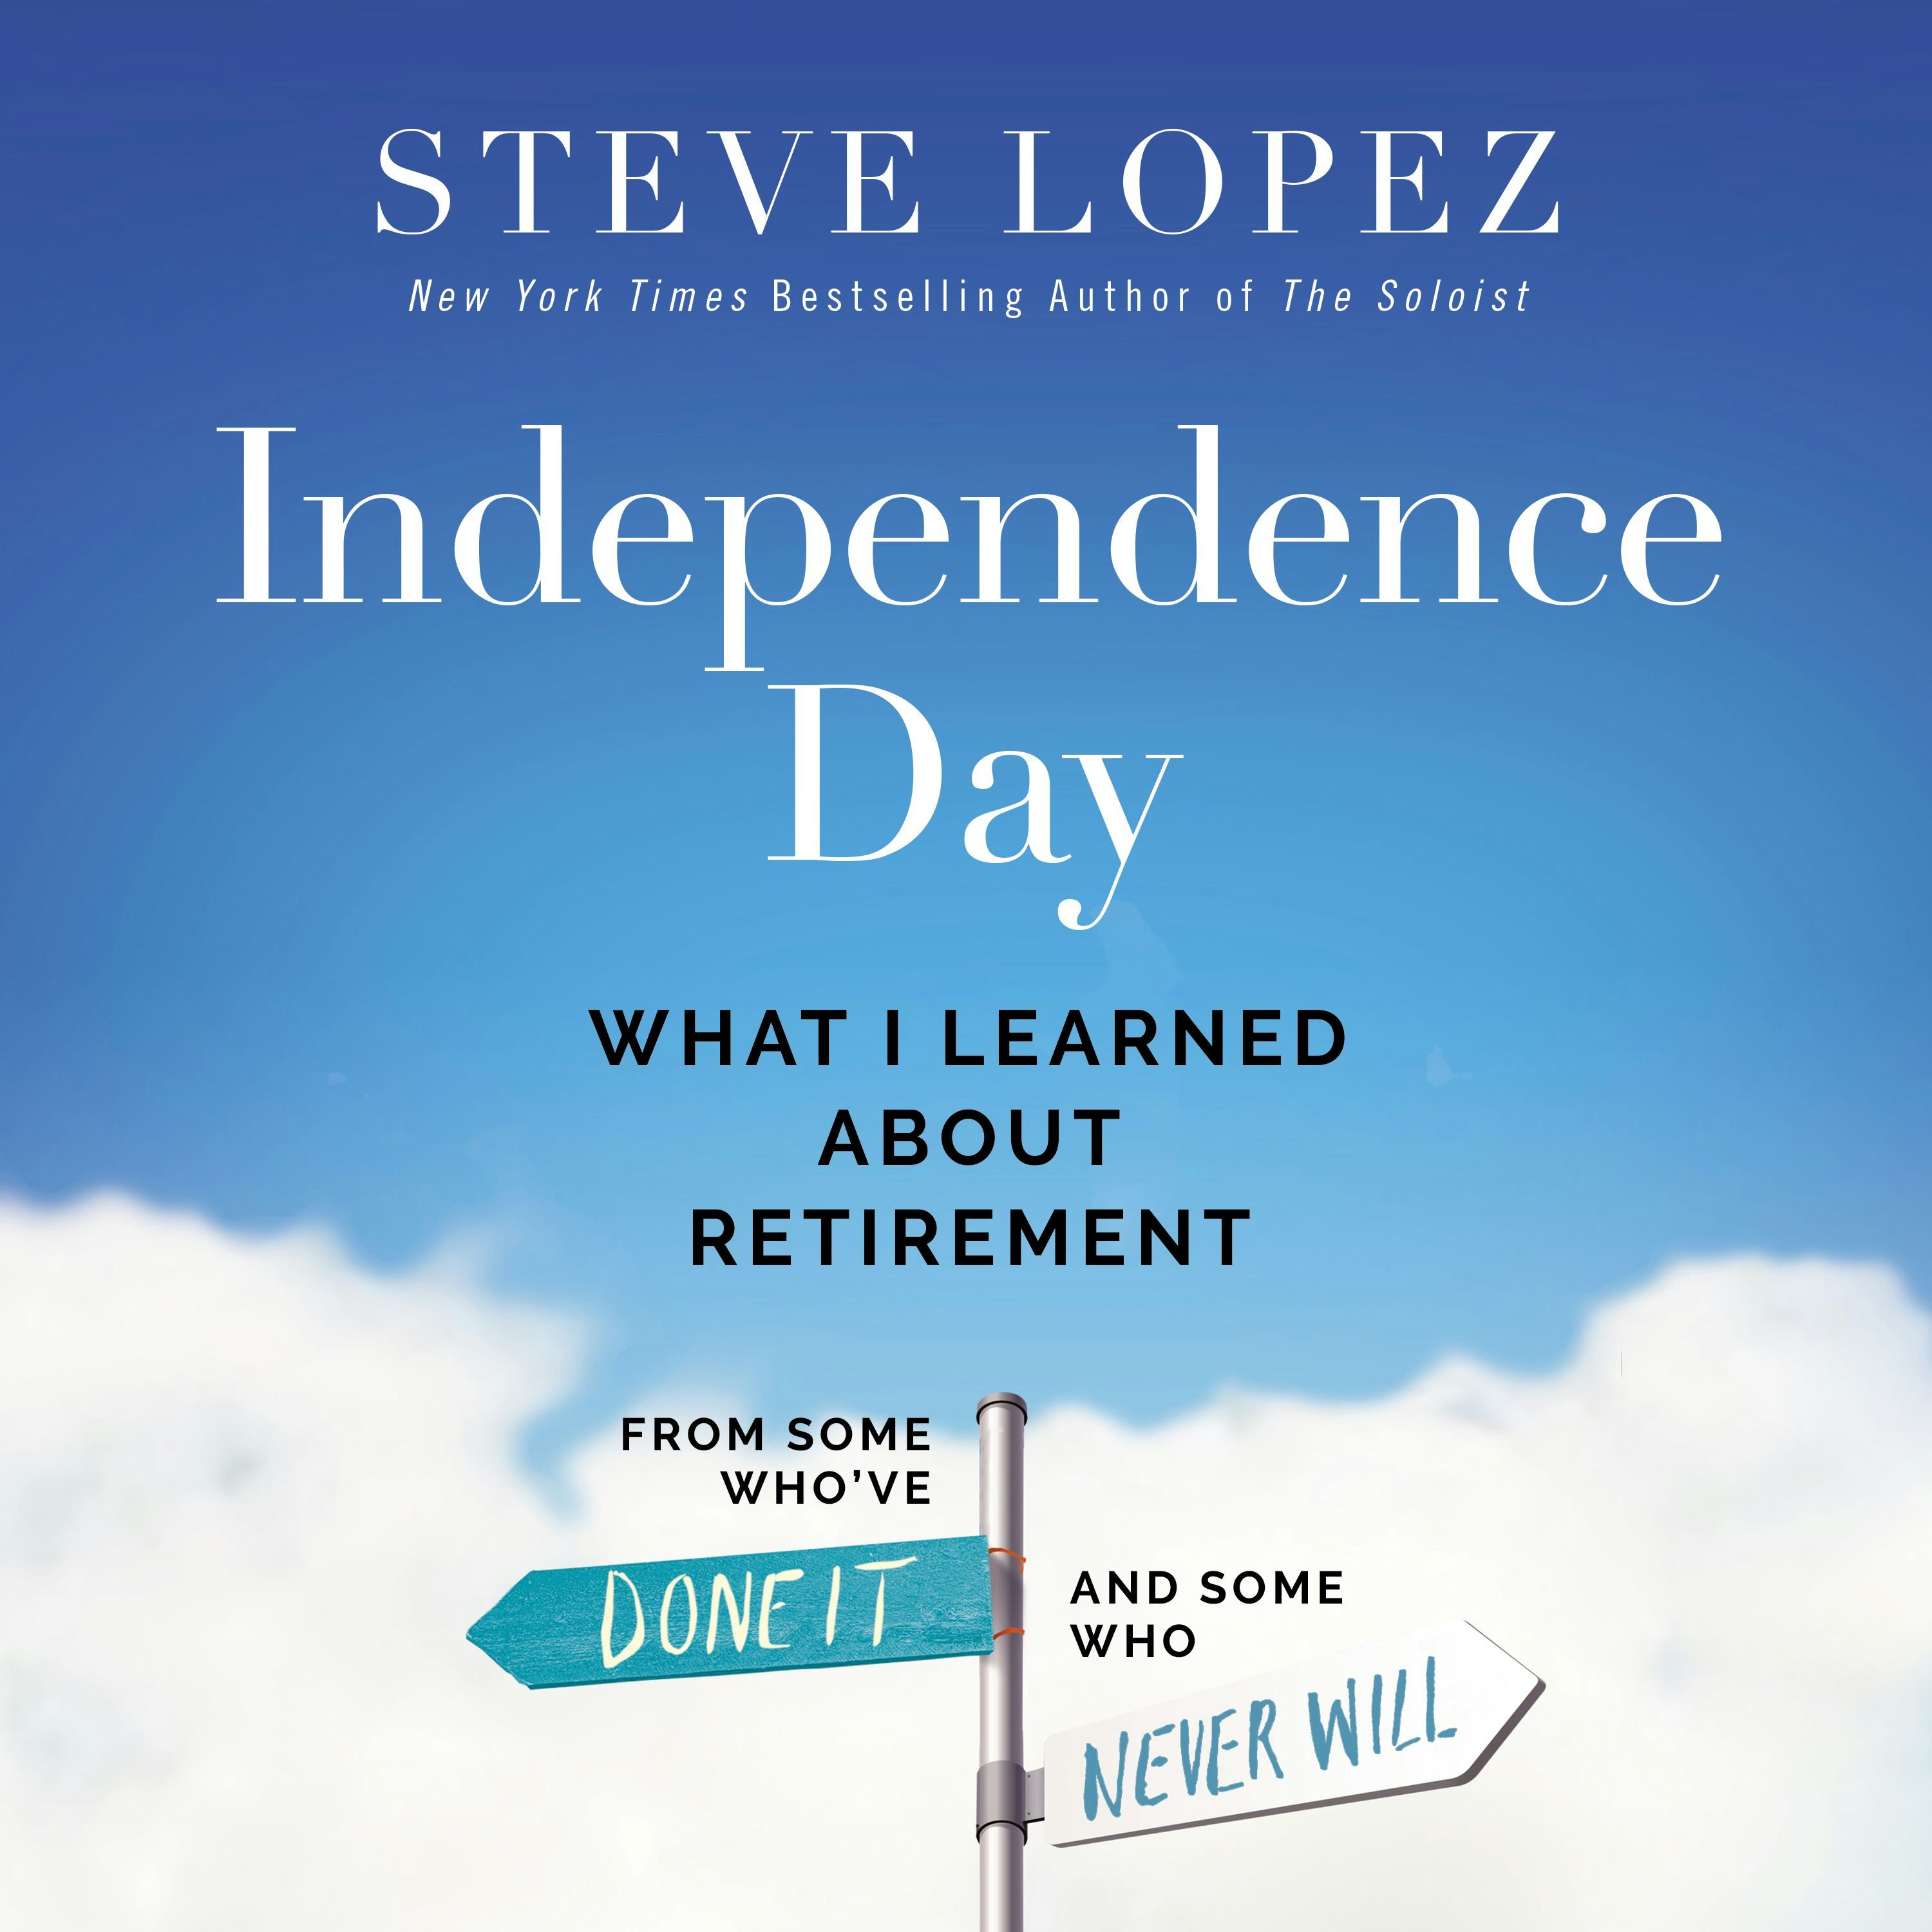 Steve Lopez: Journalism & Motivation Author, Speaker